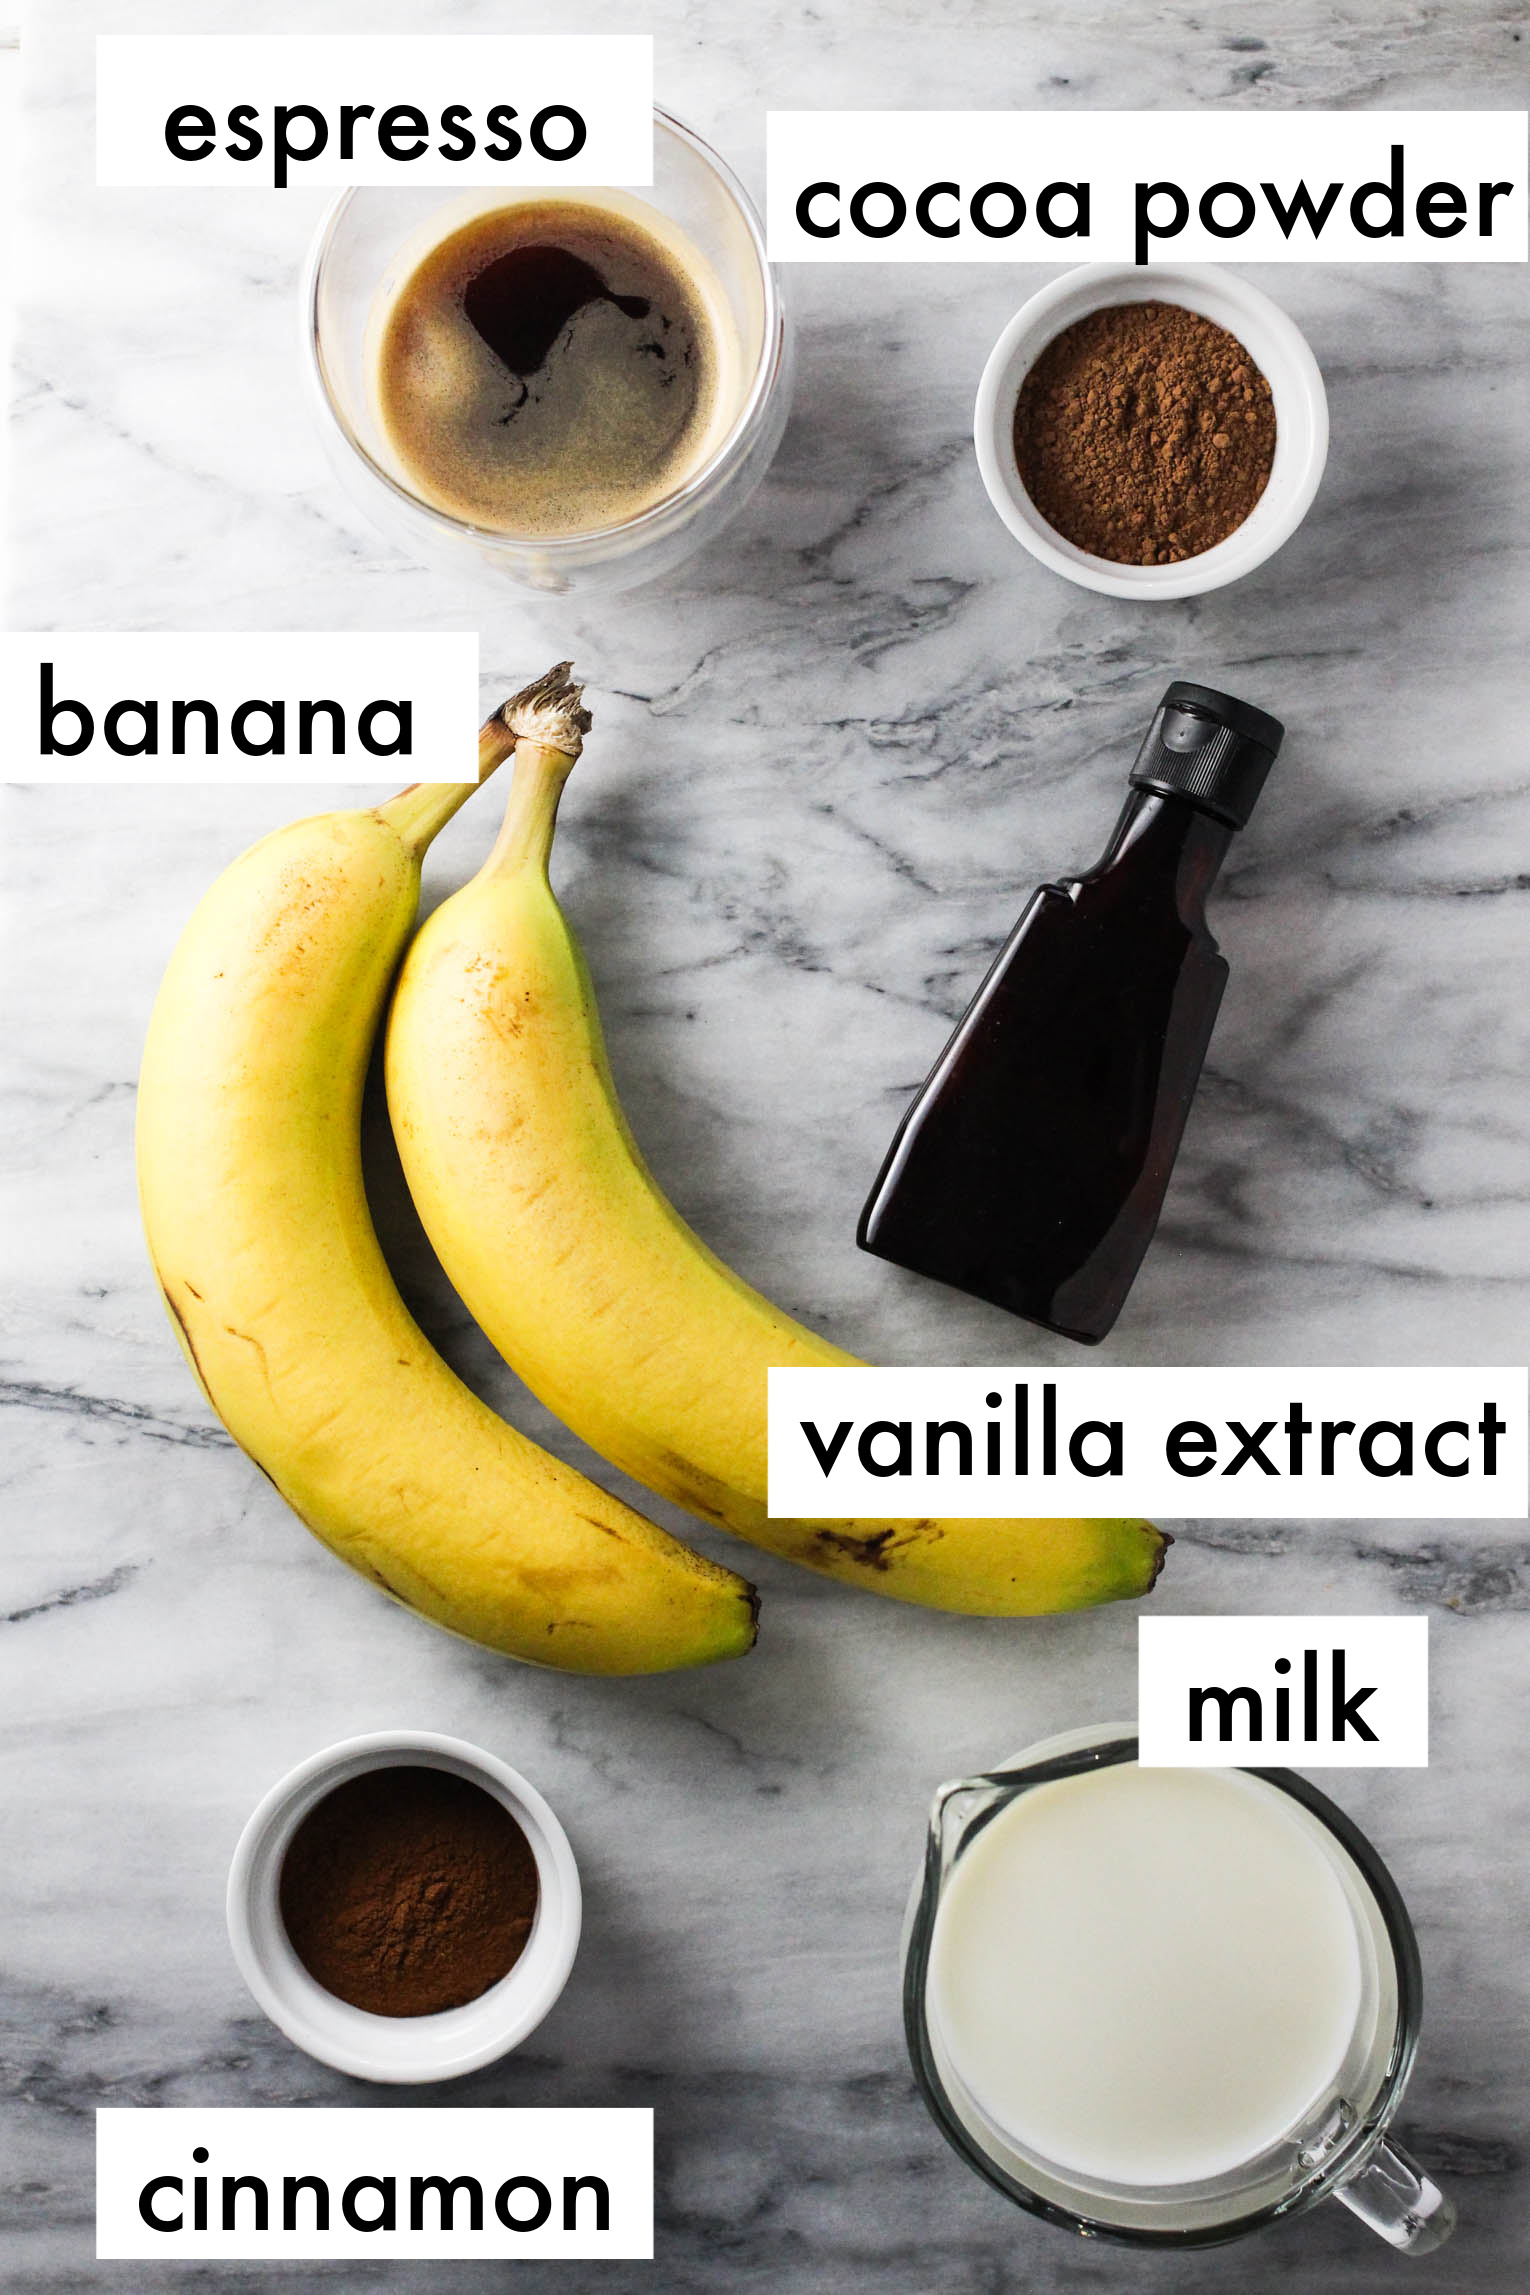 Ingredients for chocolate banana smoothie labeled as follows: espresso, cocoa powder, banana, vanilla extract, milk, cinnamon.